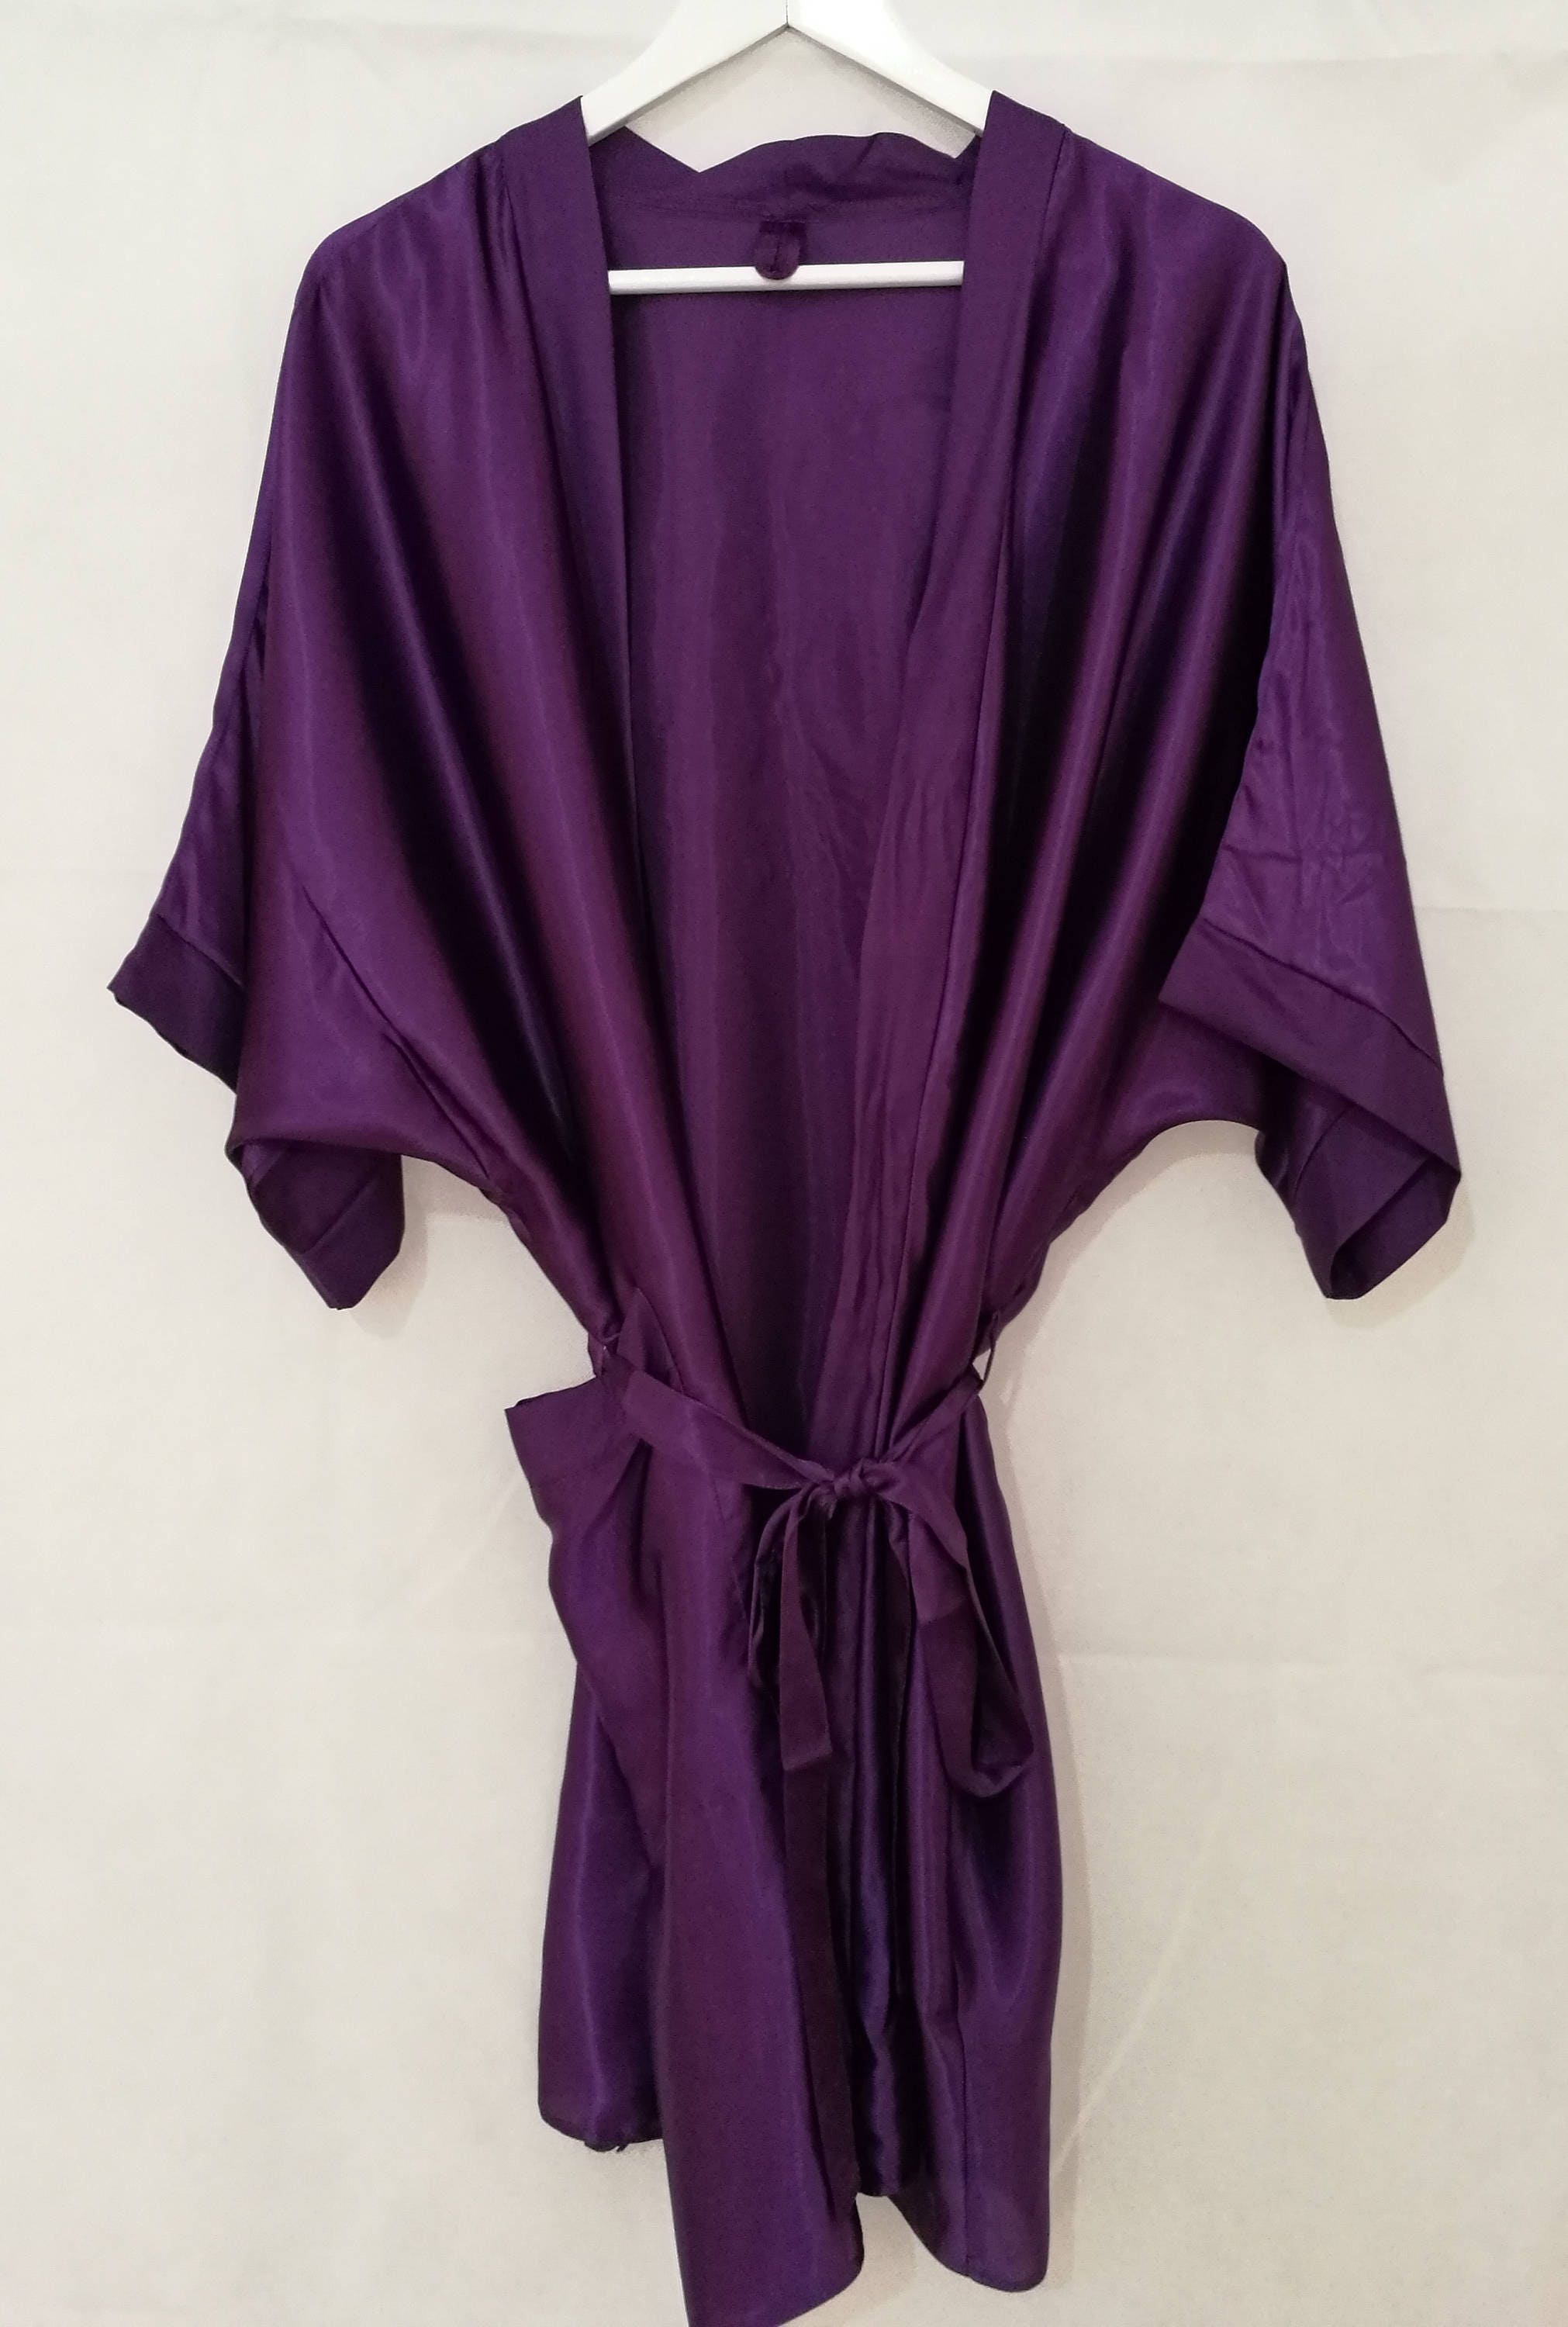 Cadbury purple dressing gowns Personalised wedding robe | Etsy